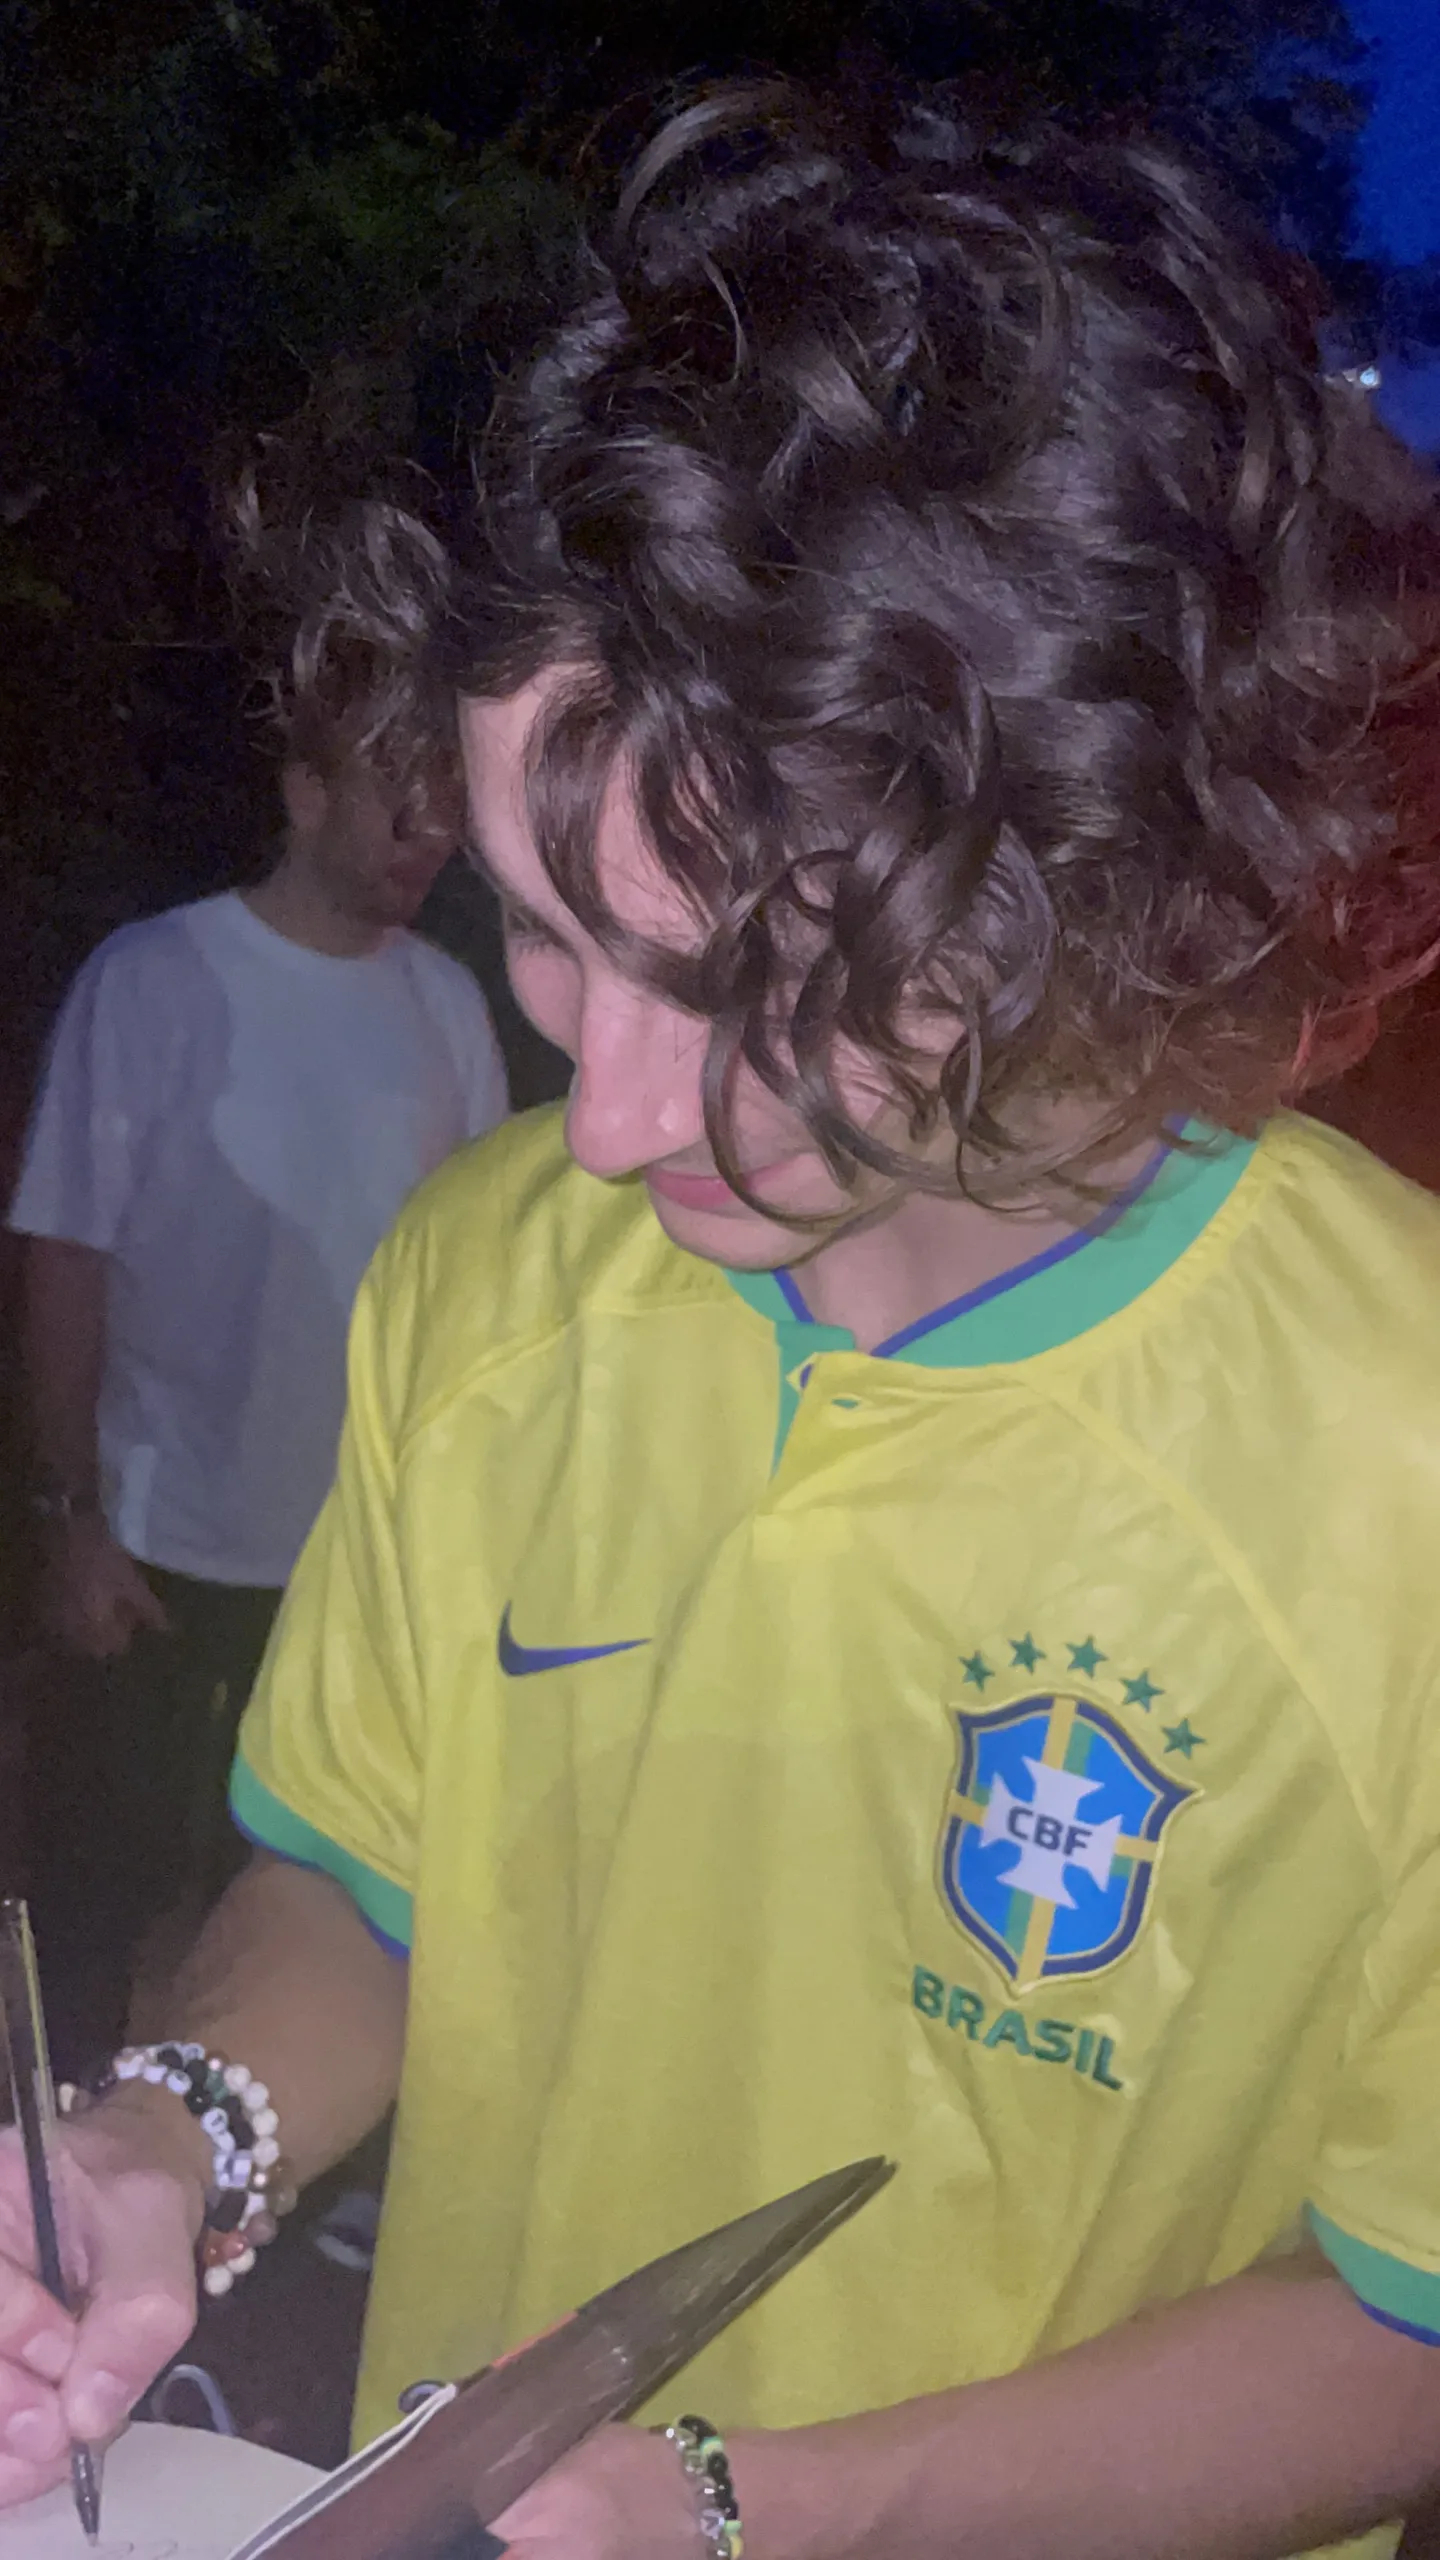 Timothéee Chalamet veste camisa do Brasil e atende fãs em São Paulo